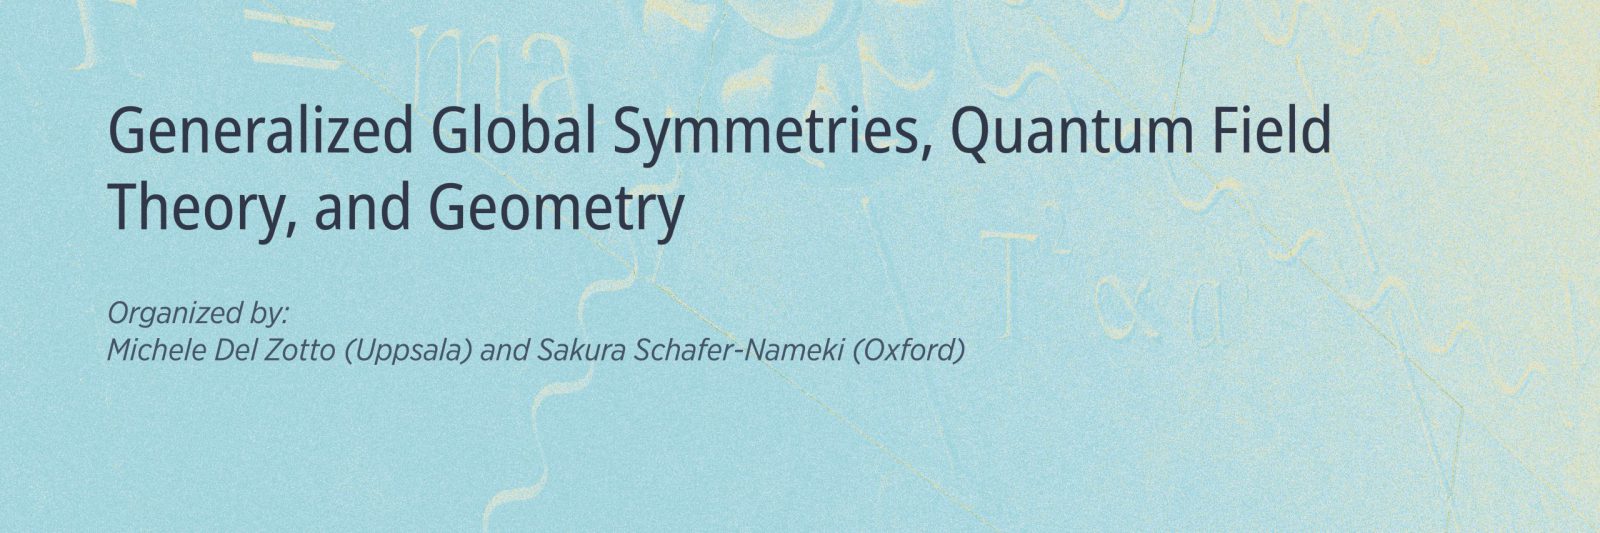 Generalized Global Symmetries Workshop Banner